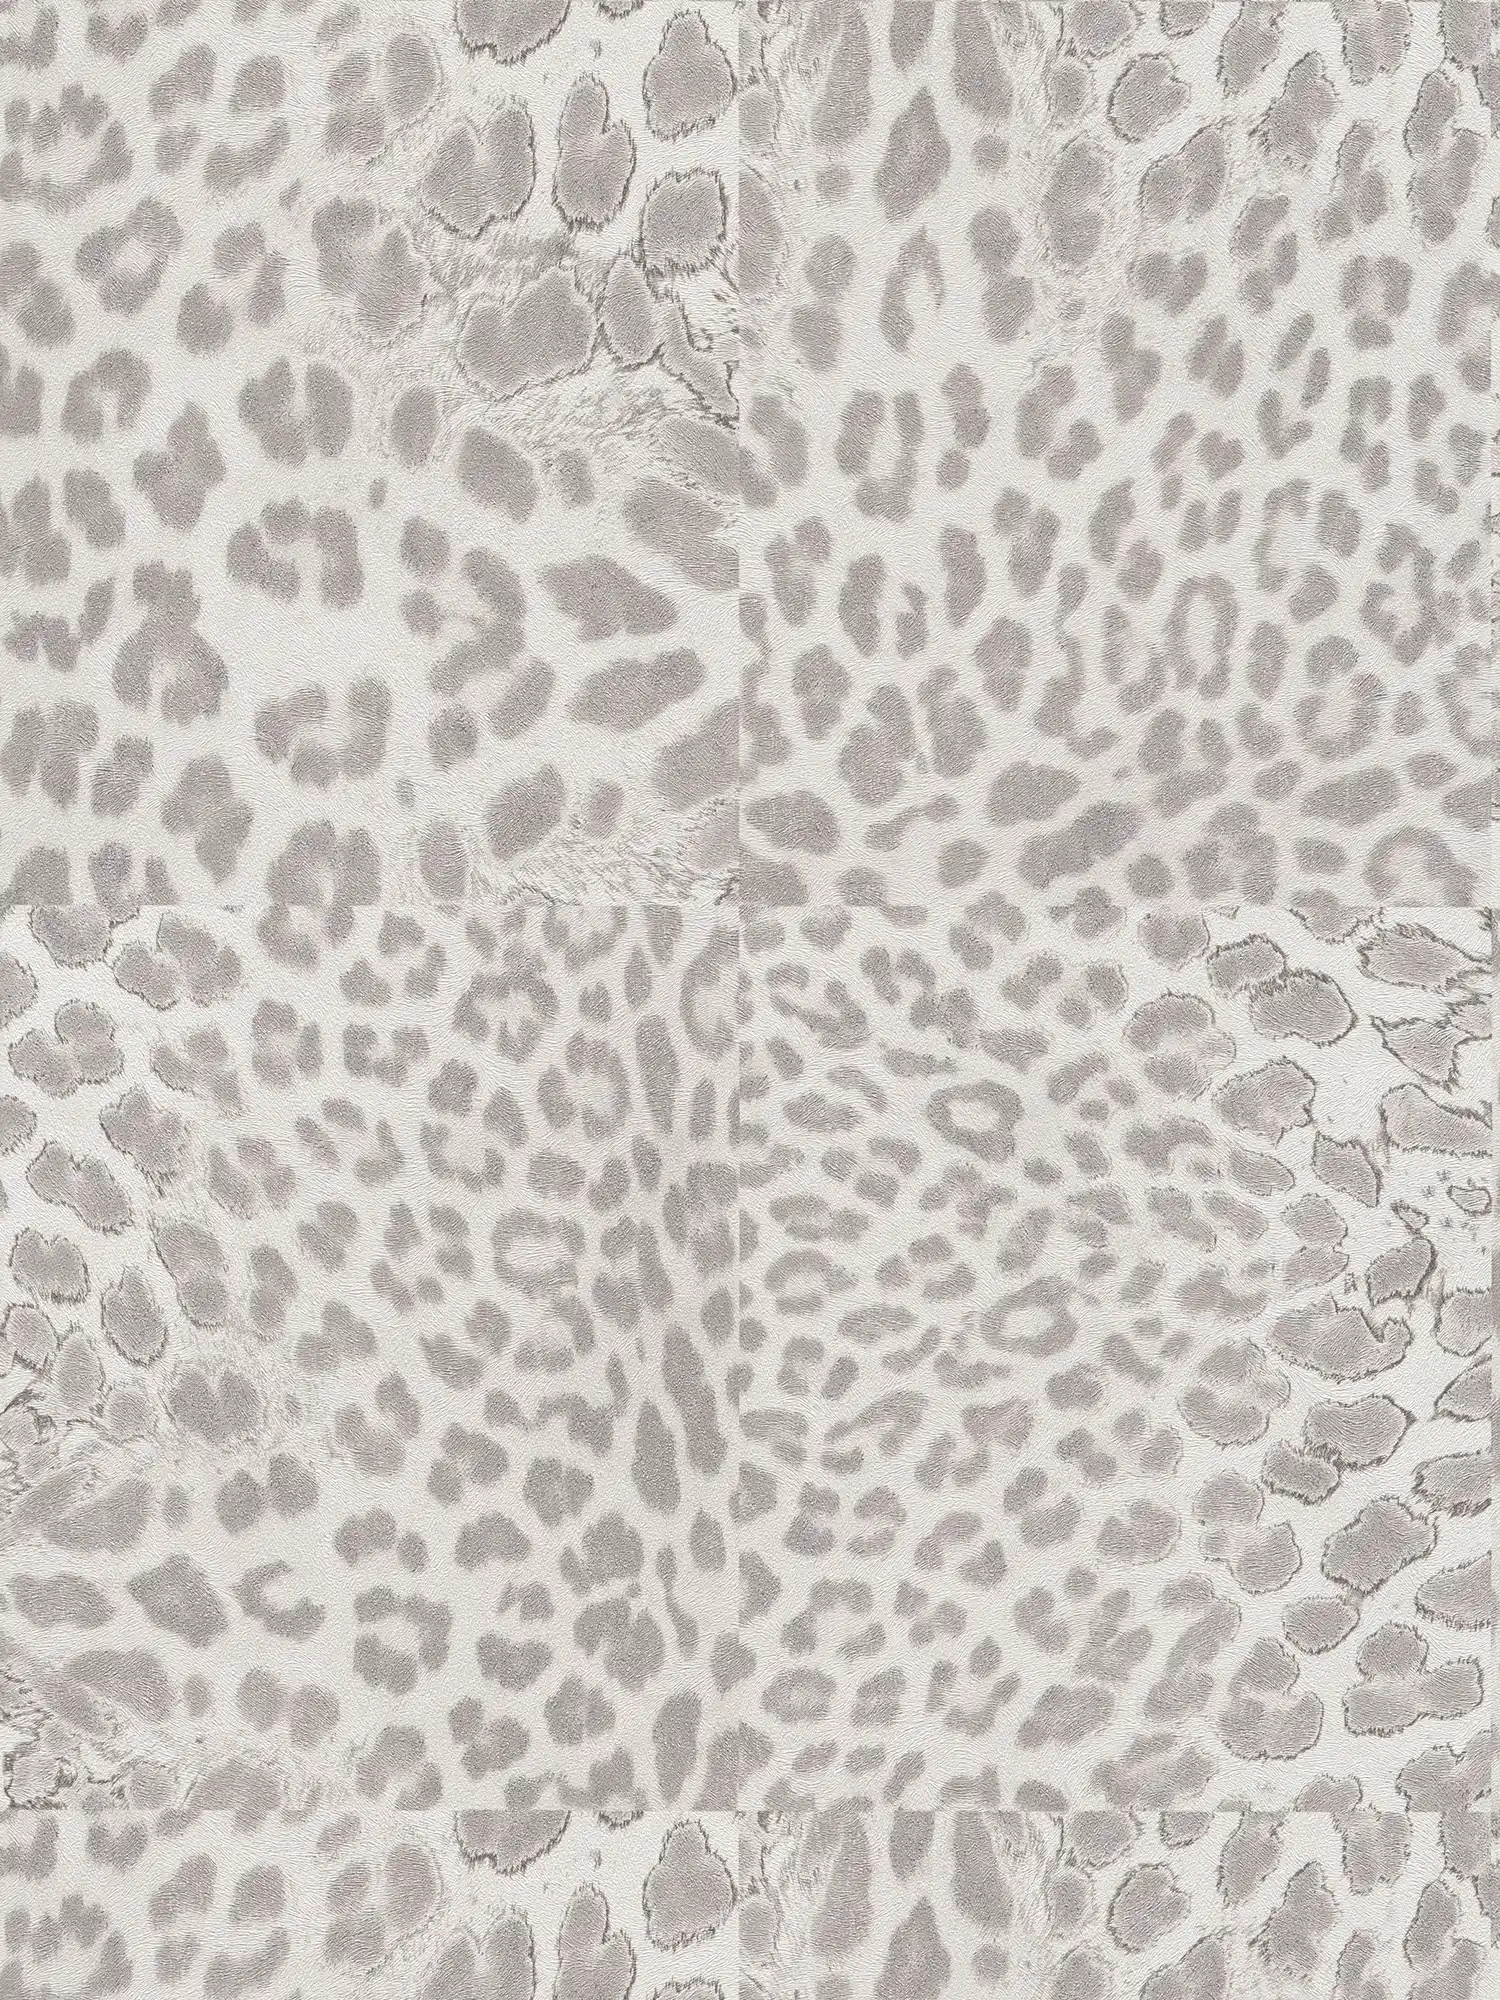 Animal print wallpaper grey with metallic leopard pattern
